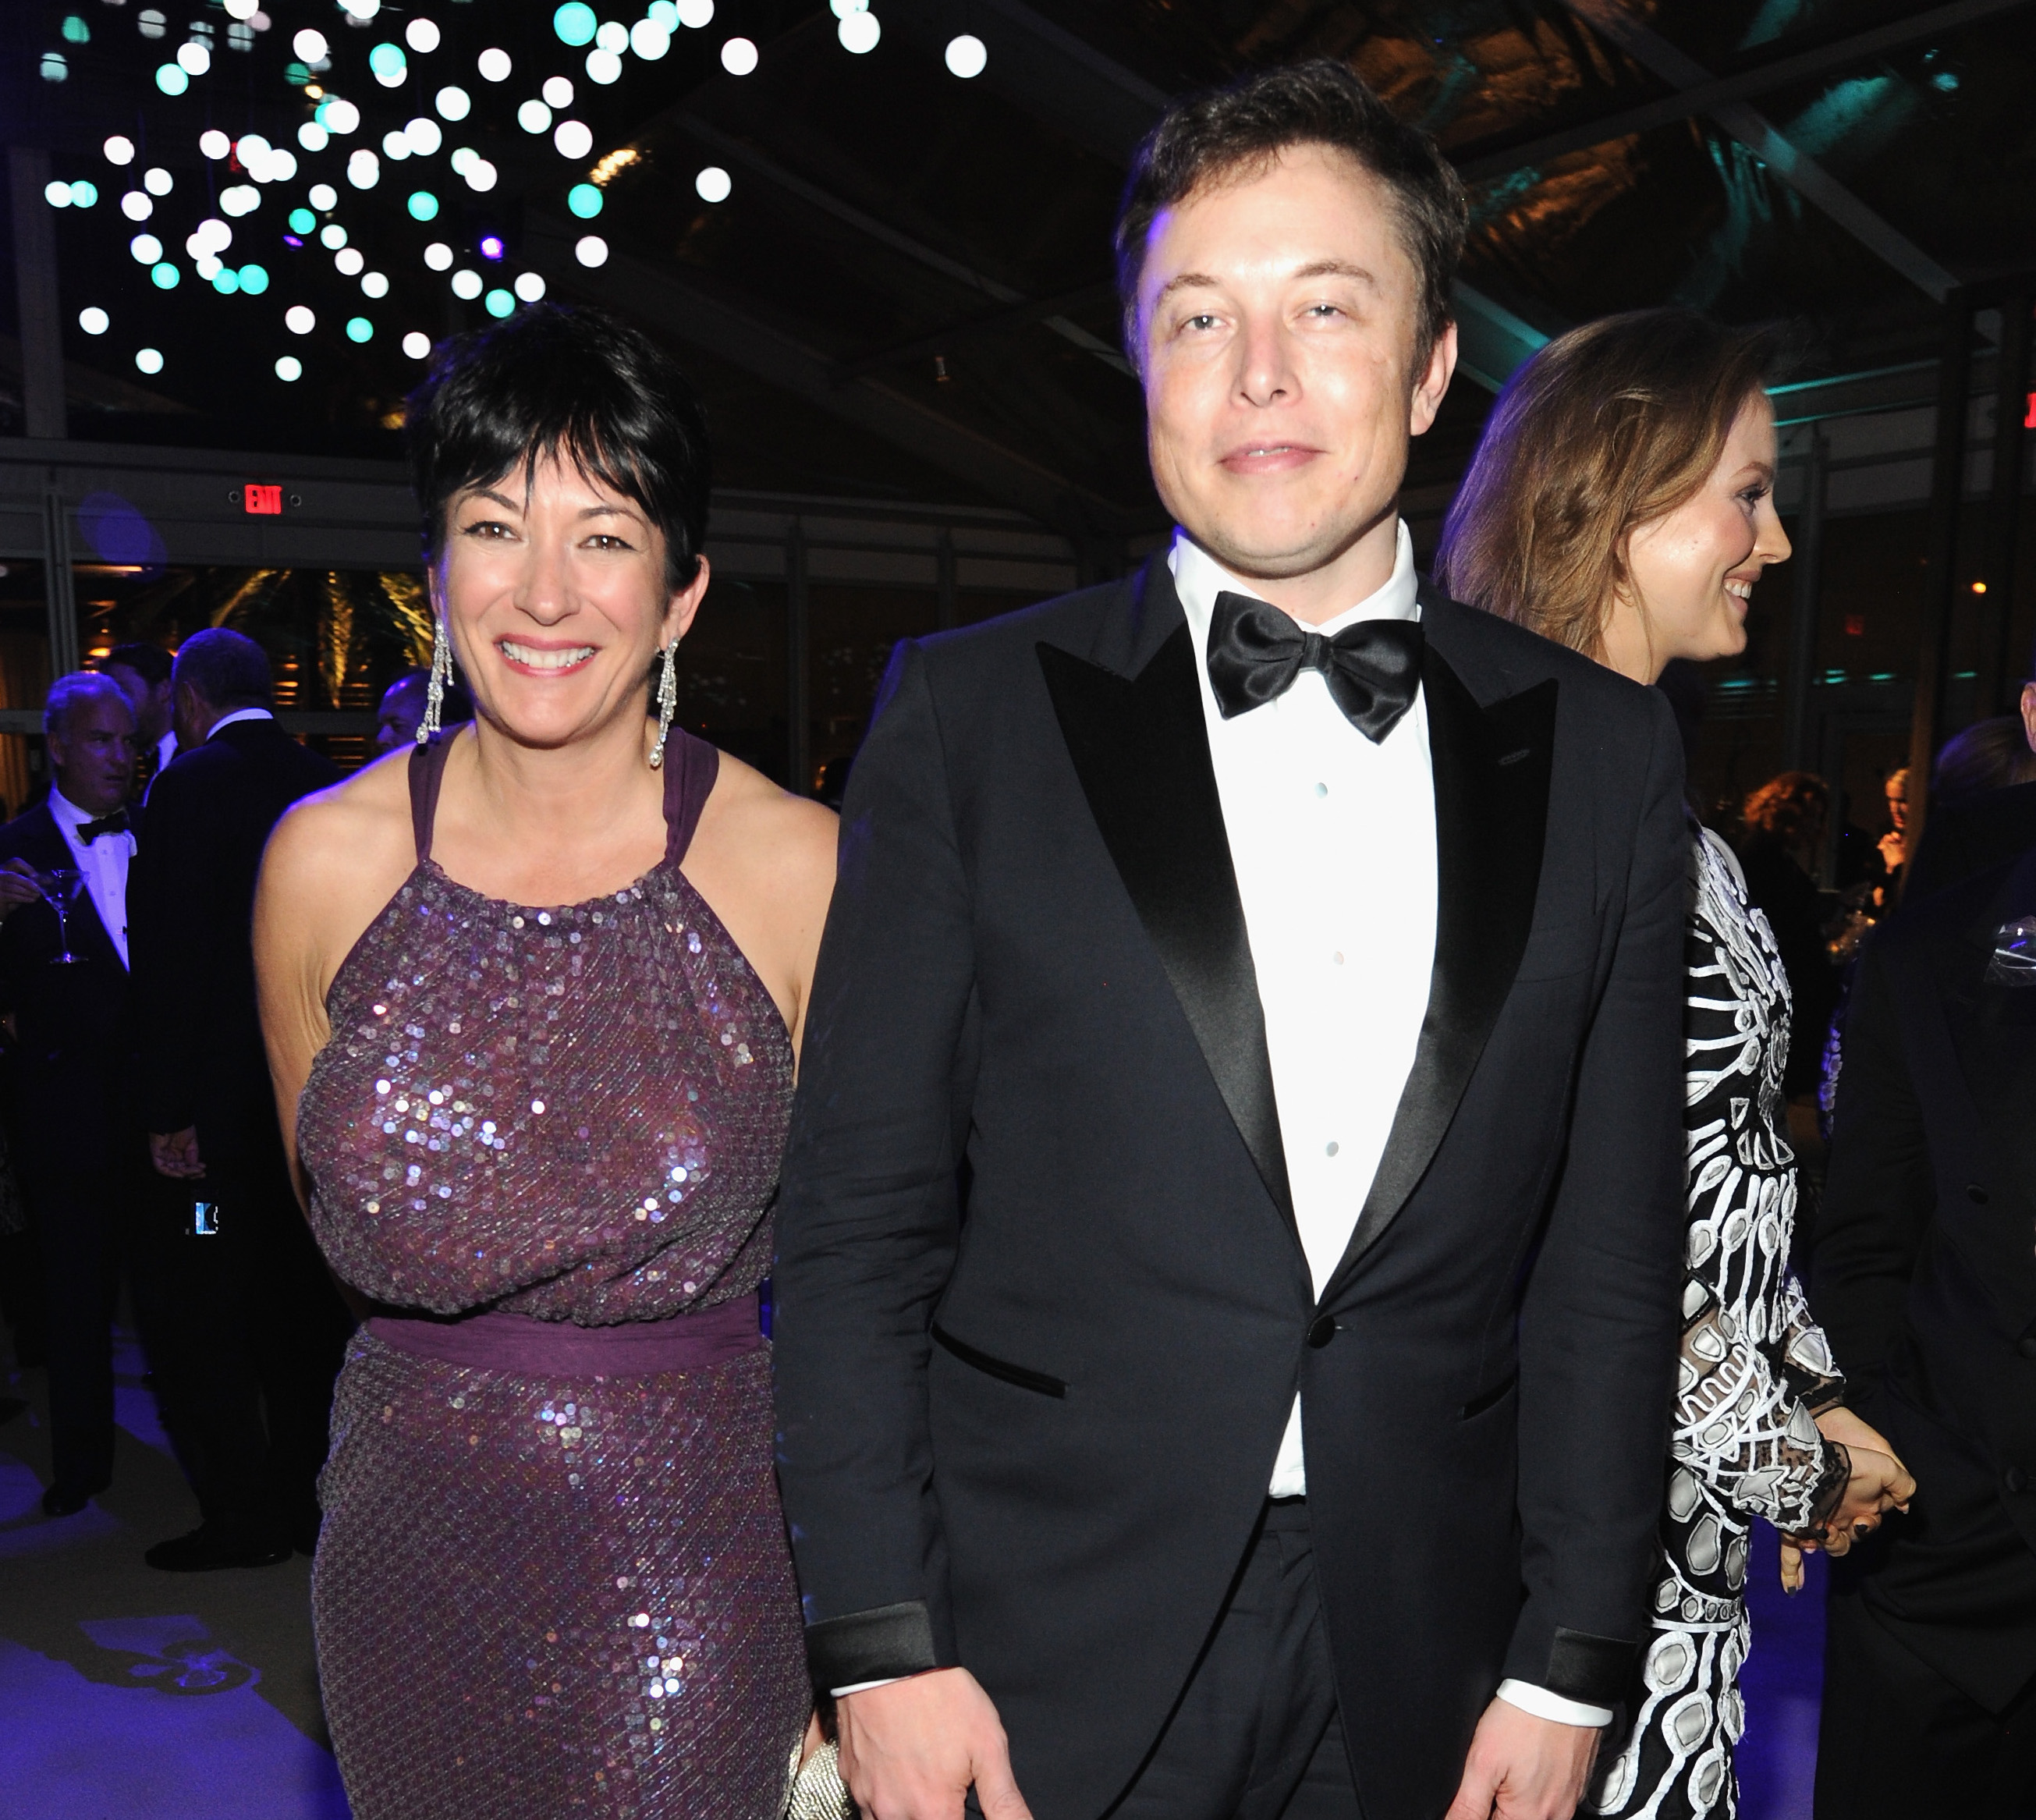 Elon Musk Photo With Ghislaine Maxwell Floods Twitter After Deal